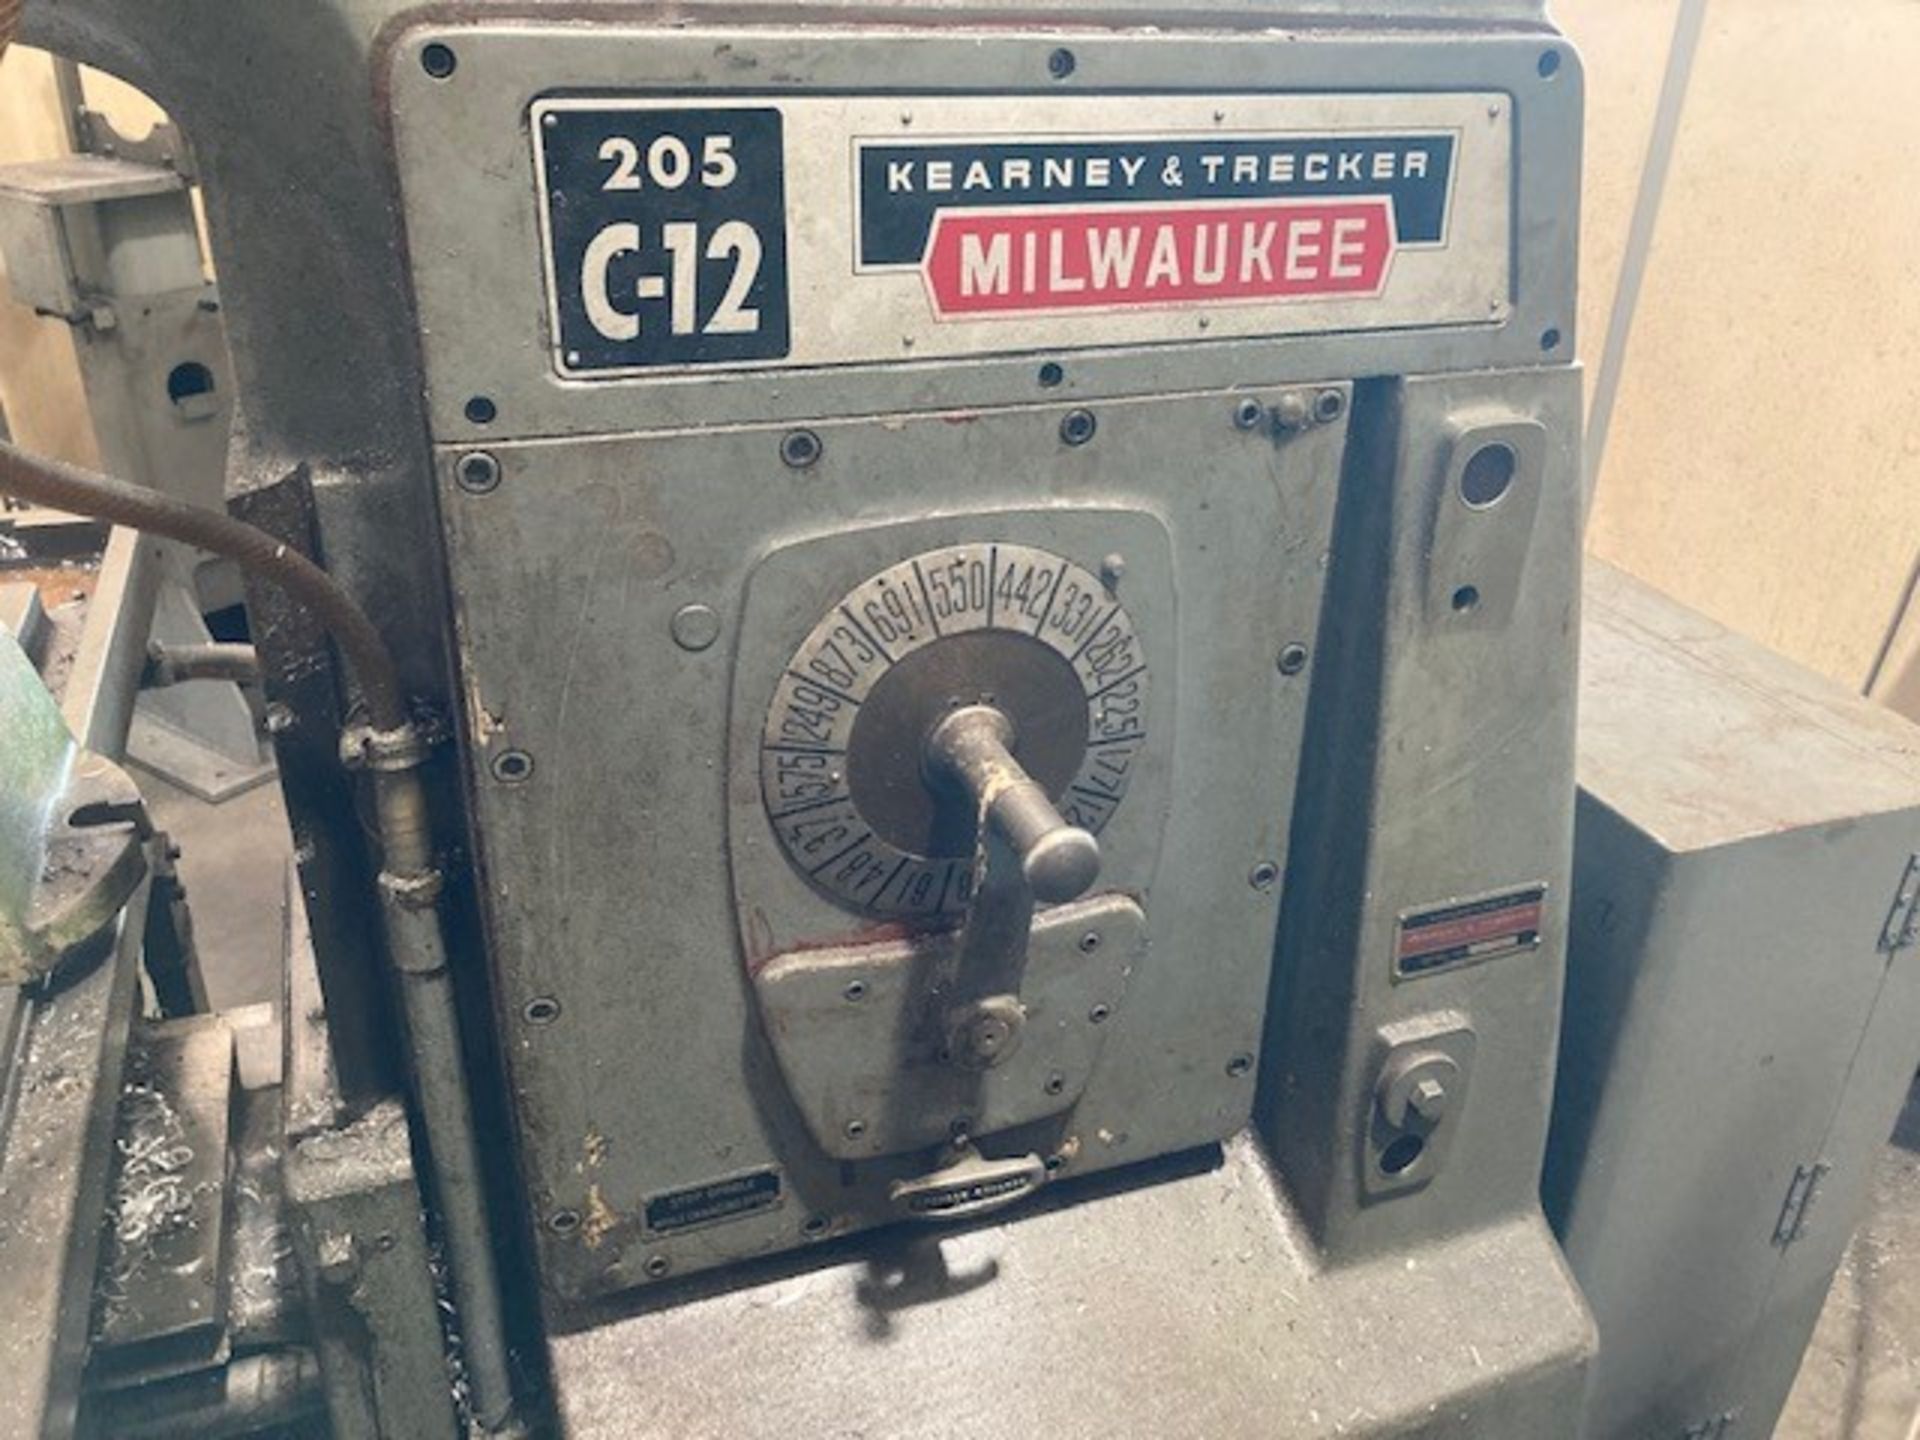 Kearney & Trecker Milwaukee 205-C12 Vertical Milling Machine - Image 4 of 6